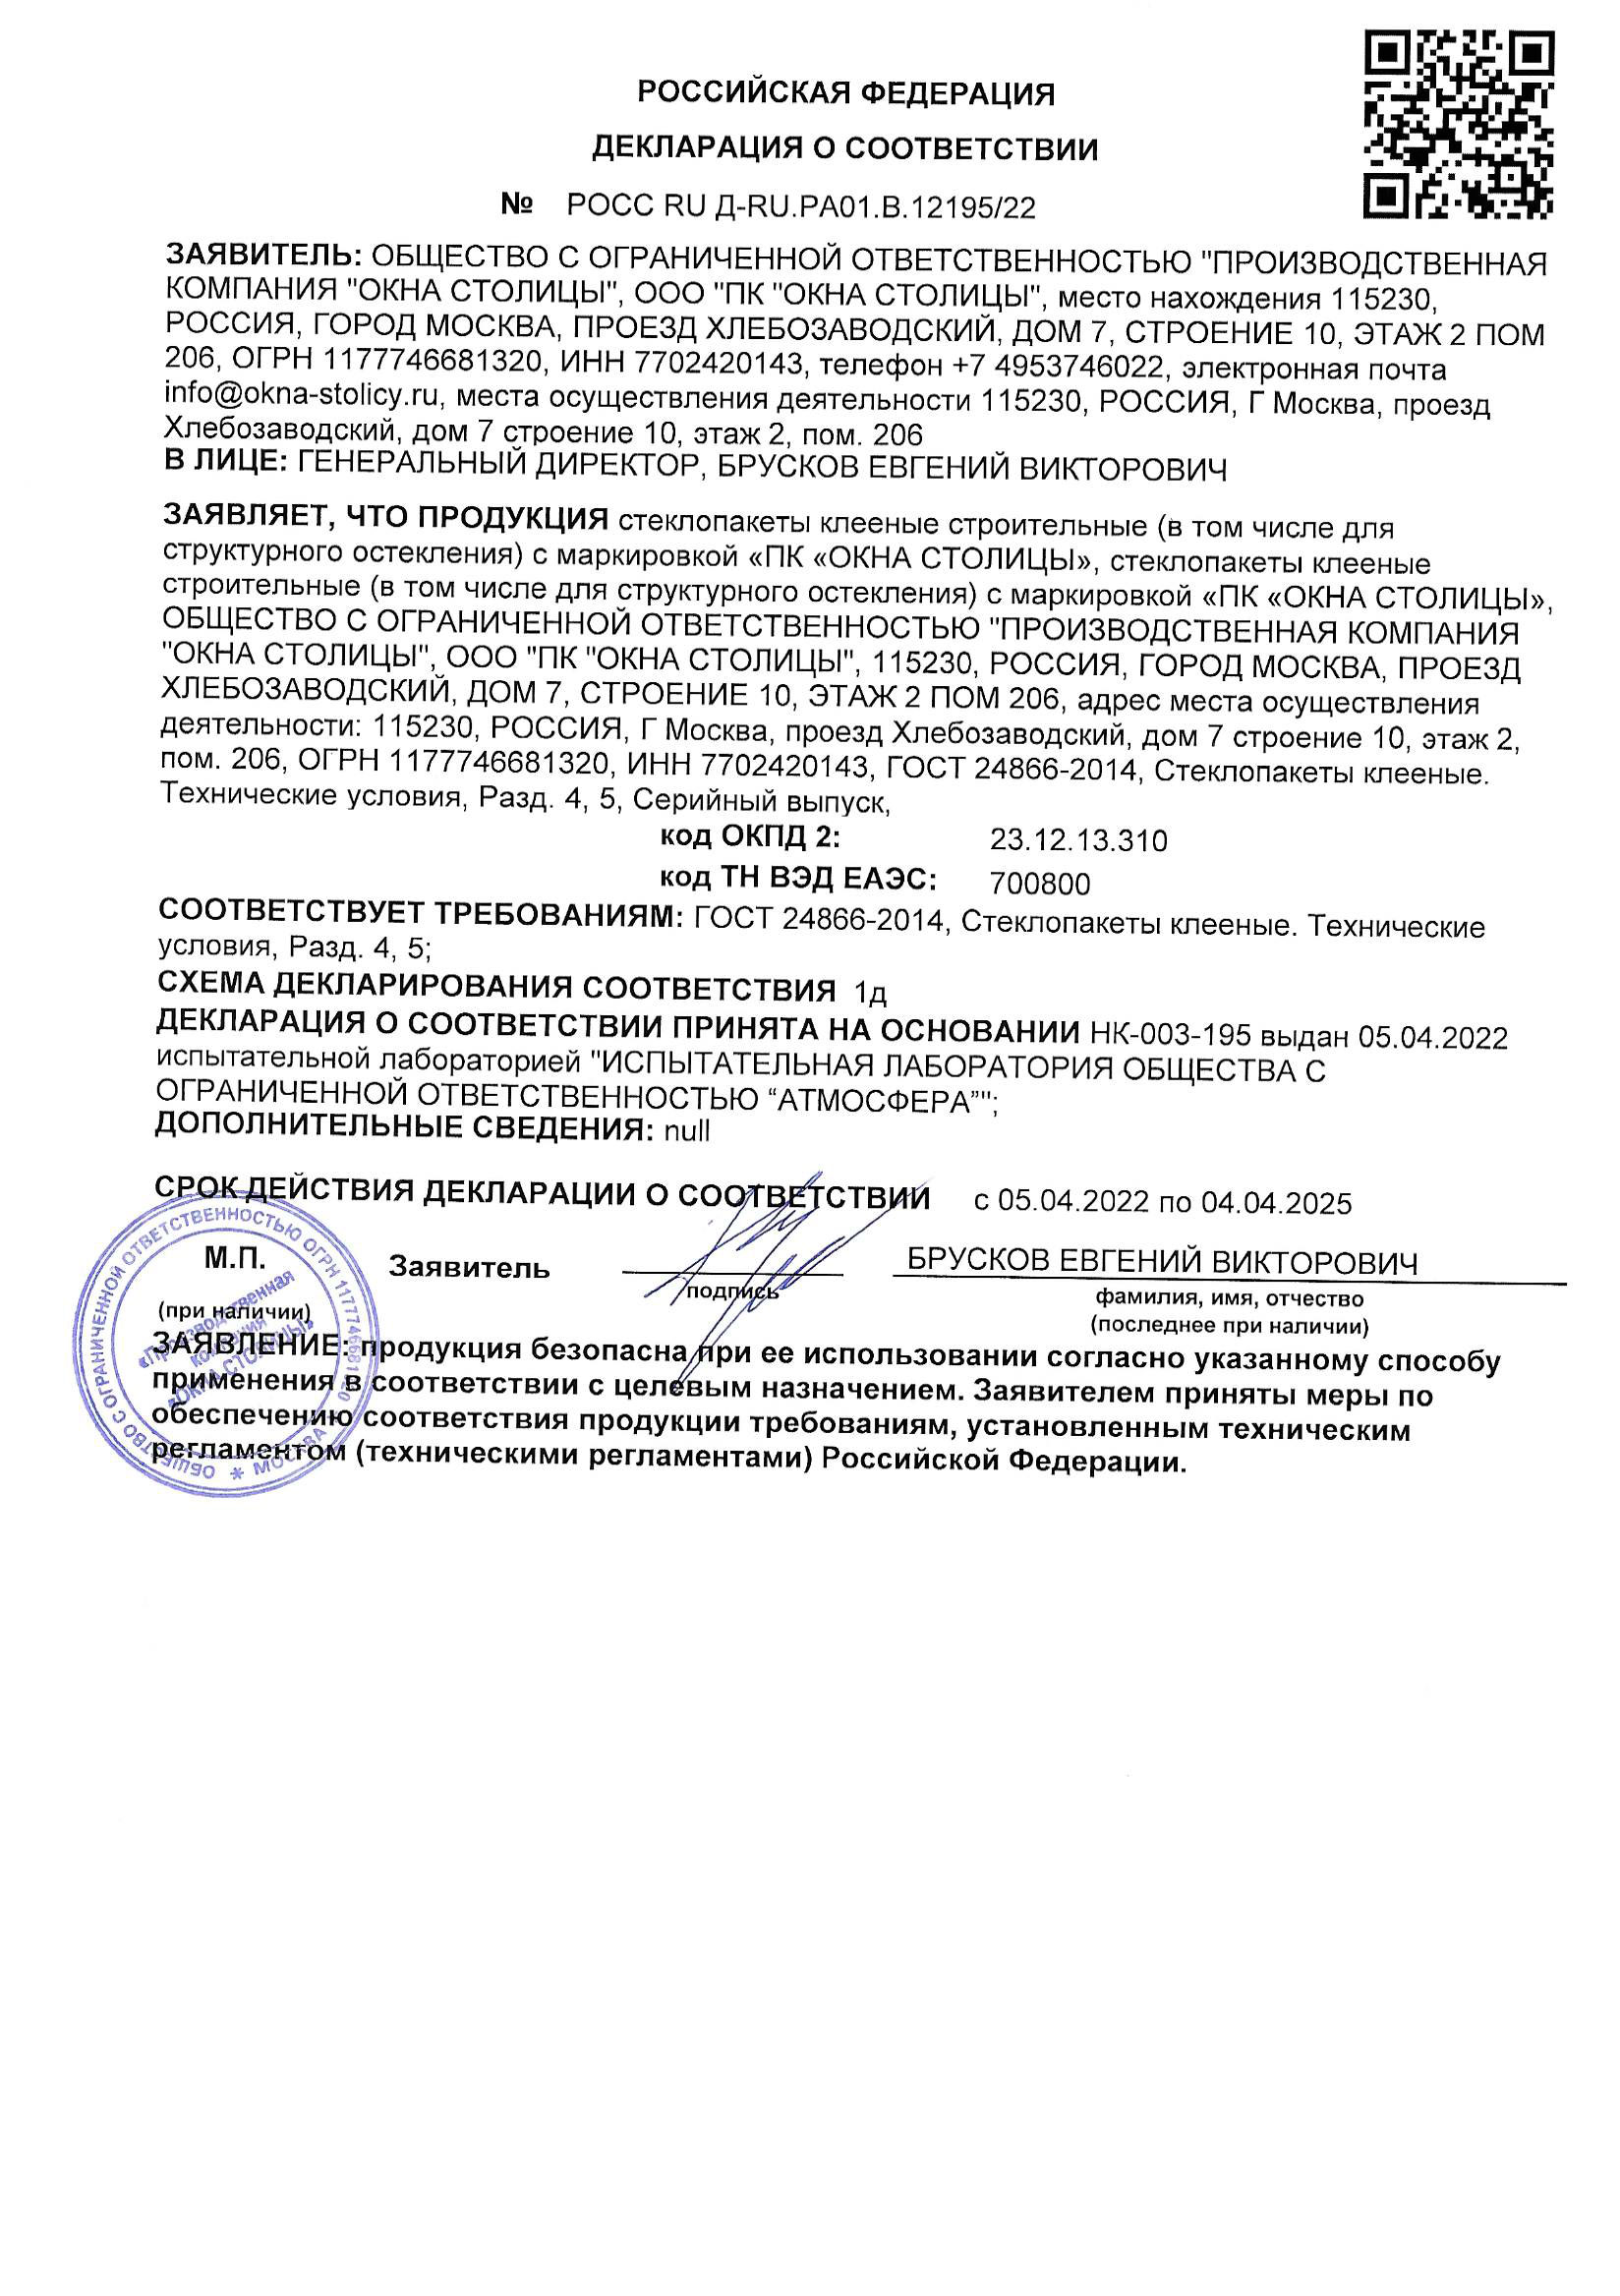 Стеклопакеты, ПК «Окна Столицы», 04.04.2025